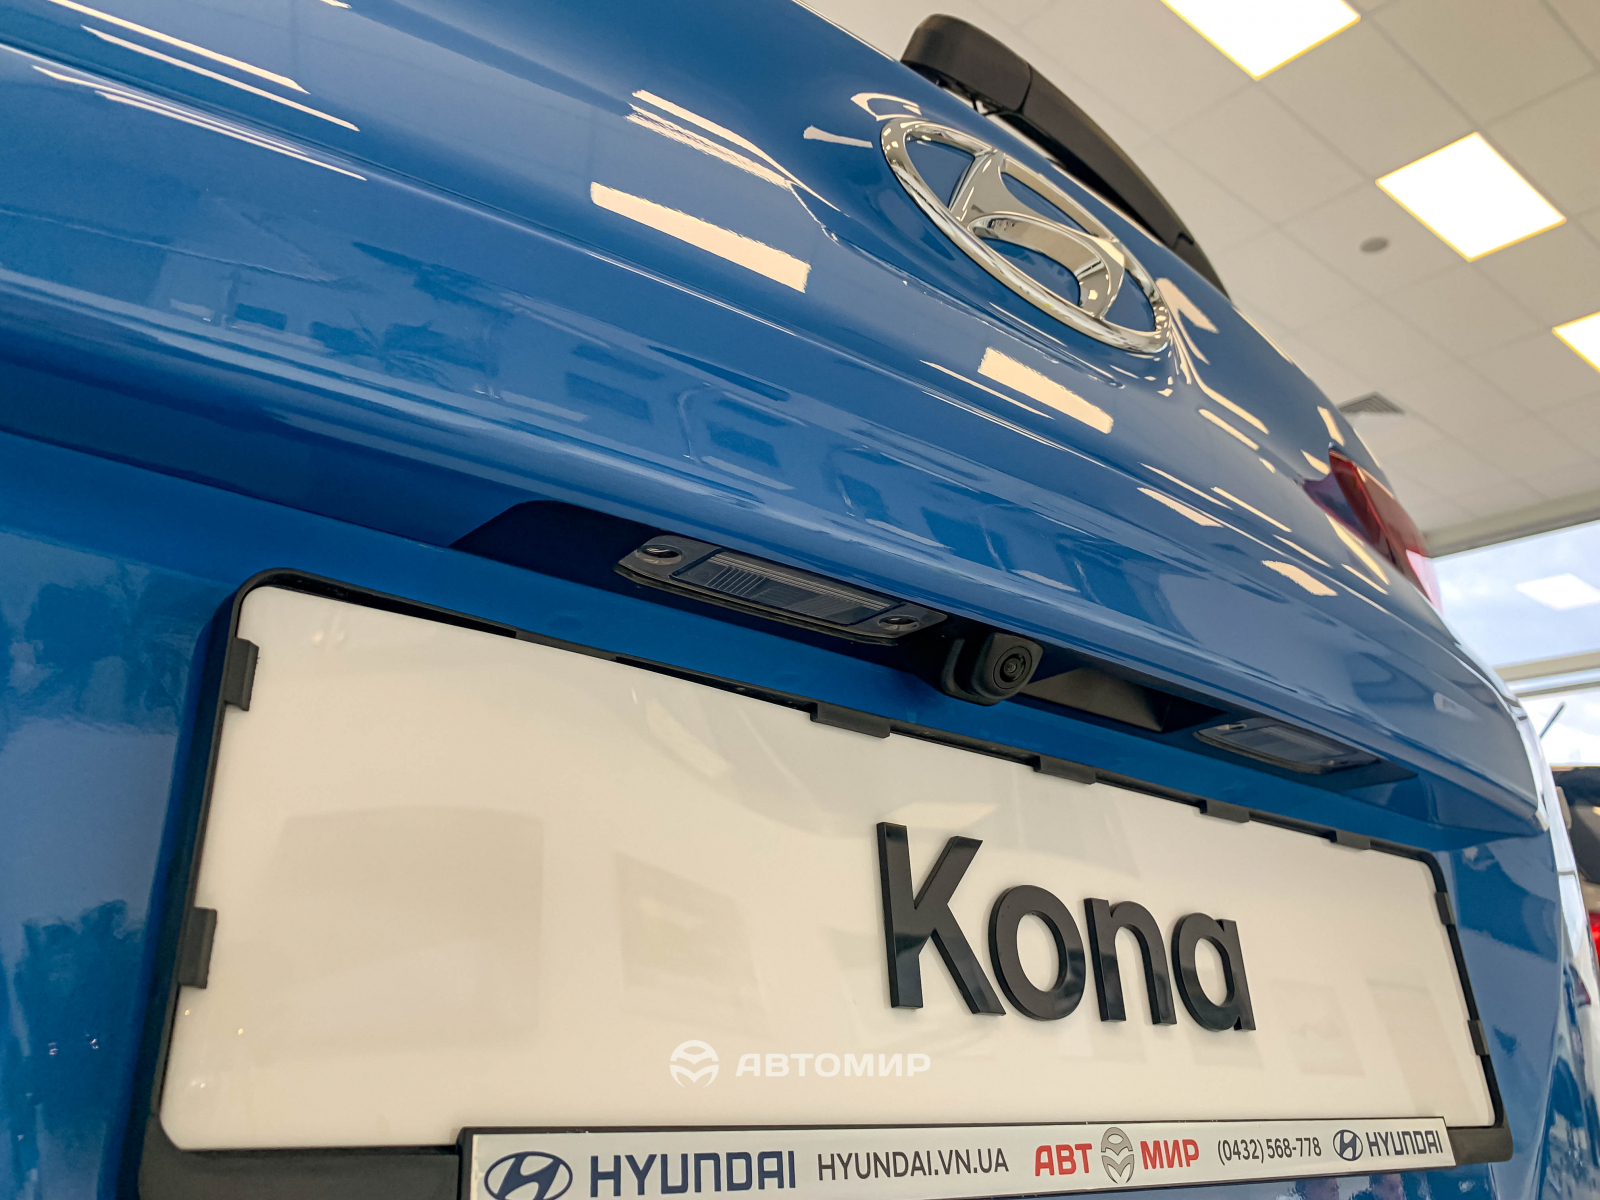 Hyundai KONA FL N-Line Elegance 2-tone. Твій стиль, твої правила. | ВІК-Експо - фото 11